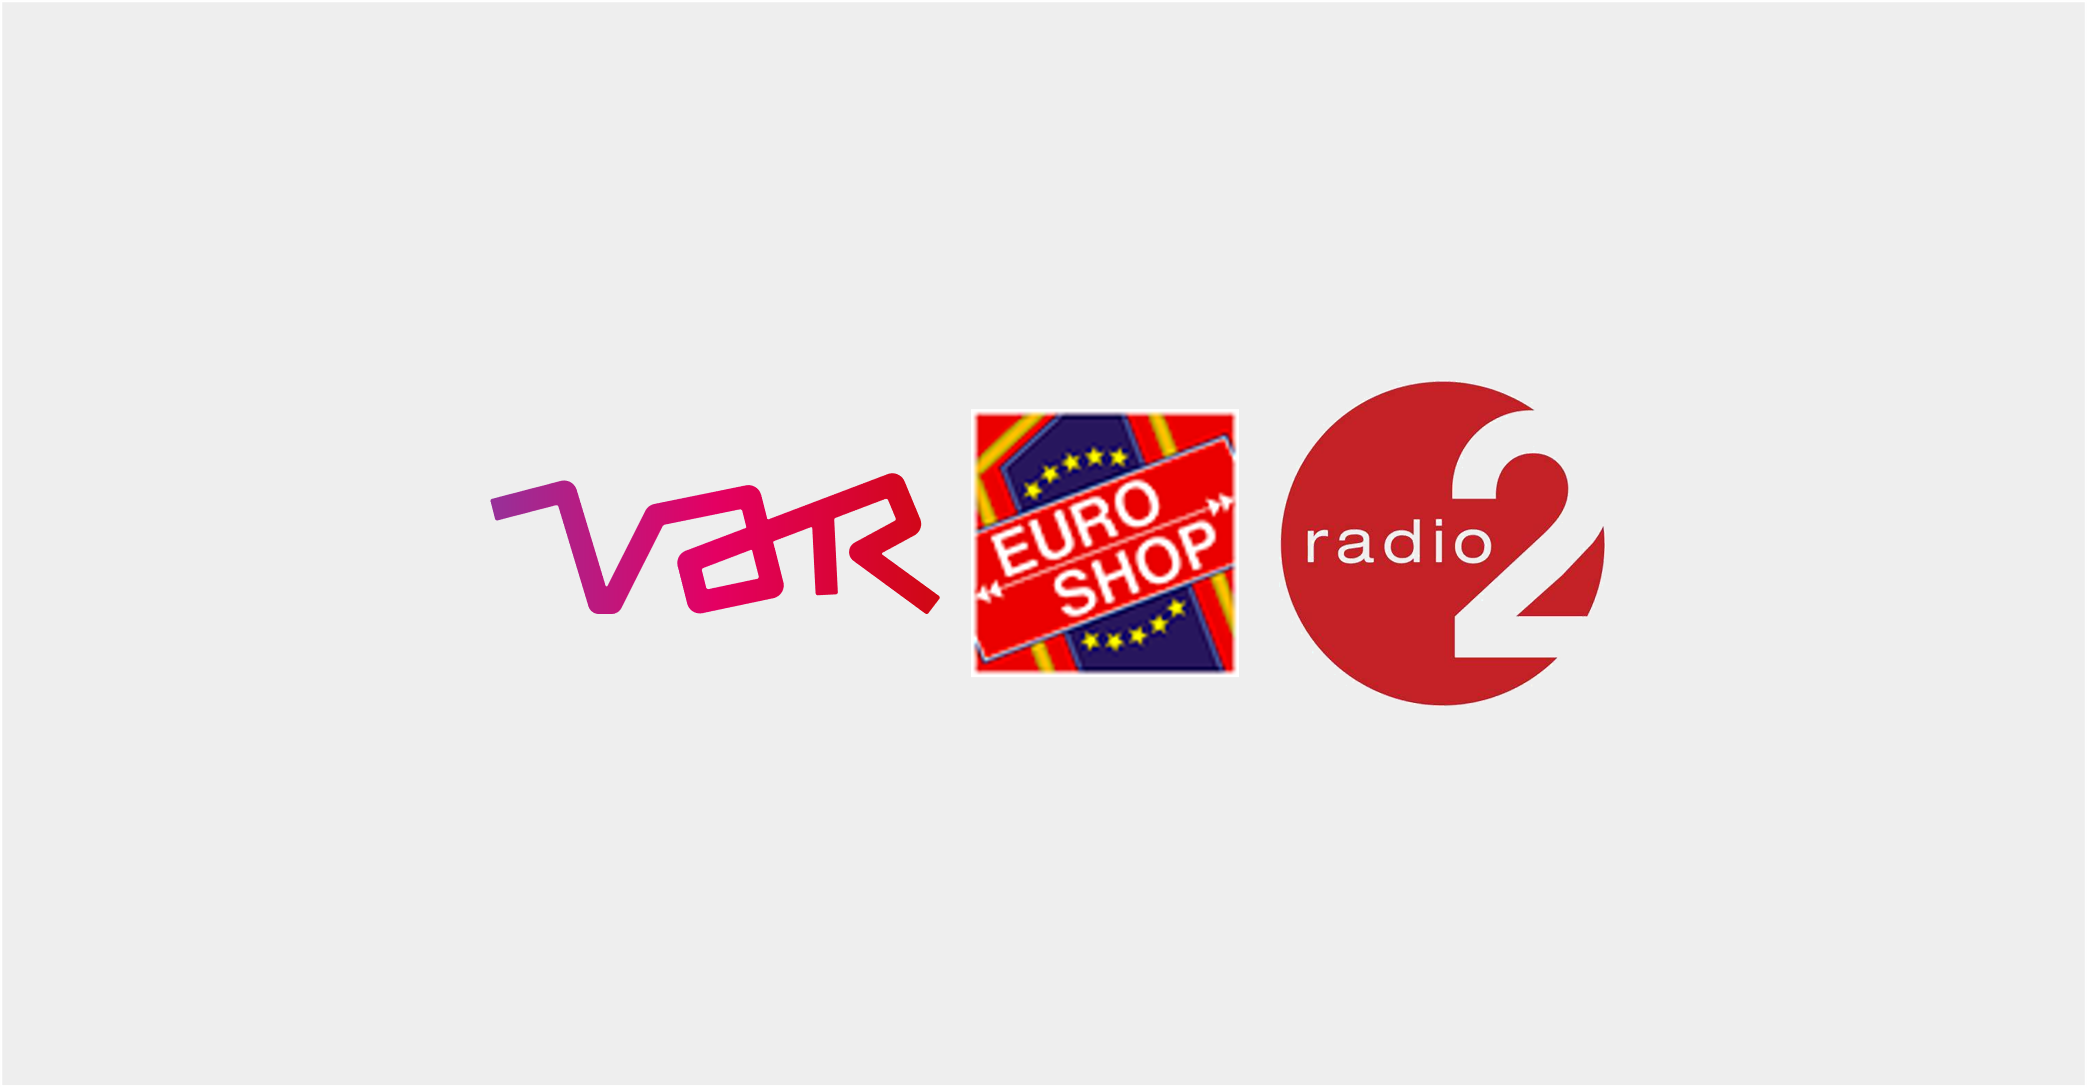 Var, Euro Shop and Radio2 logos